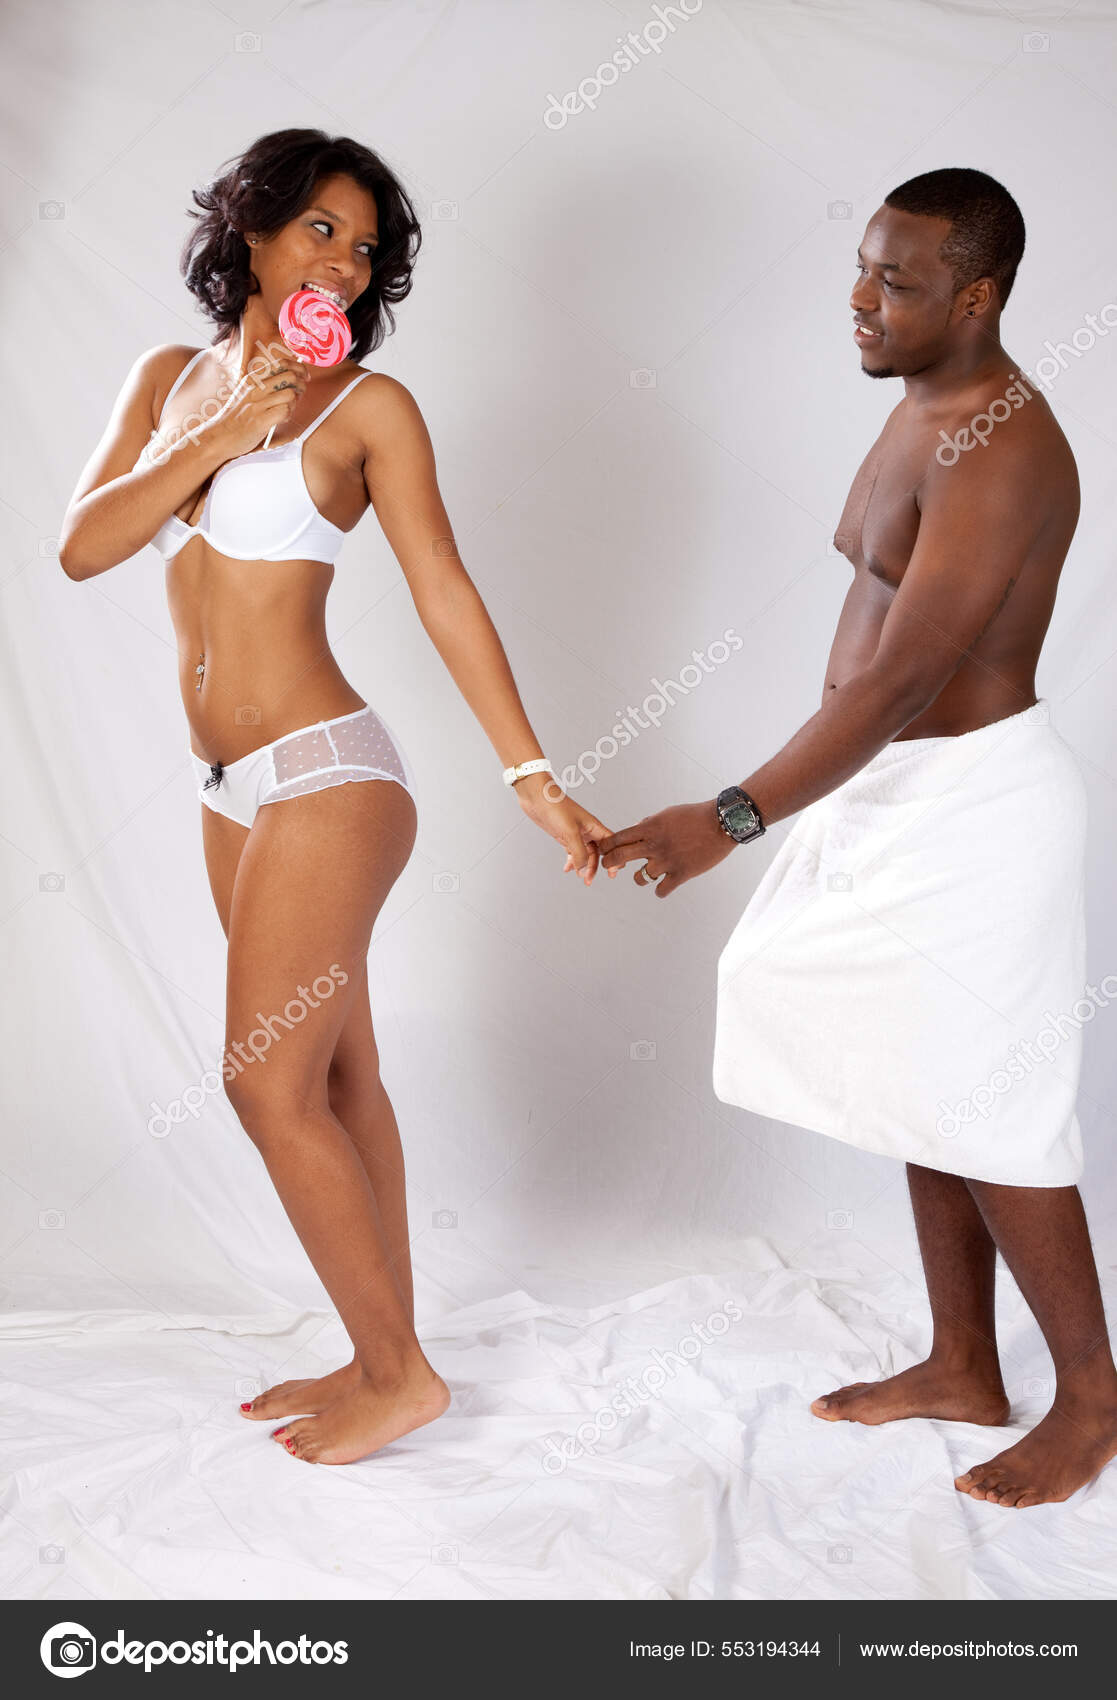 https://st.depositphotos.com/35756824/55319/i/1600/depositphotos_553194344-stock-photo-romantic-couple-underwear-sucker.jpg